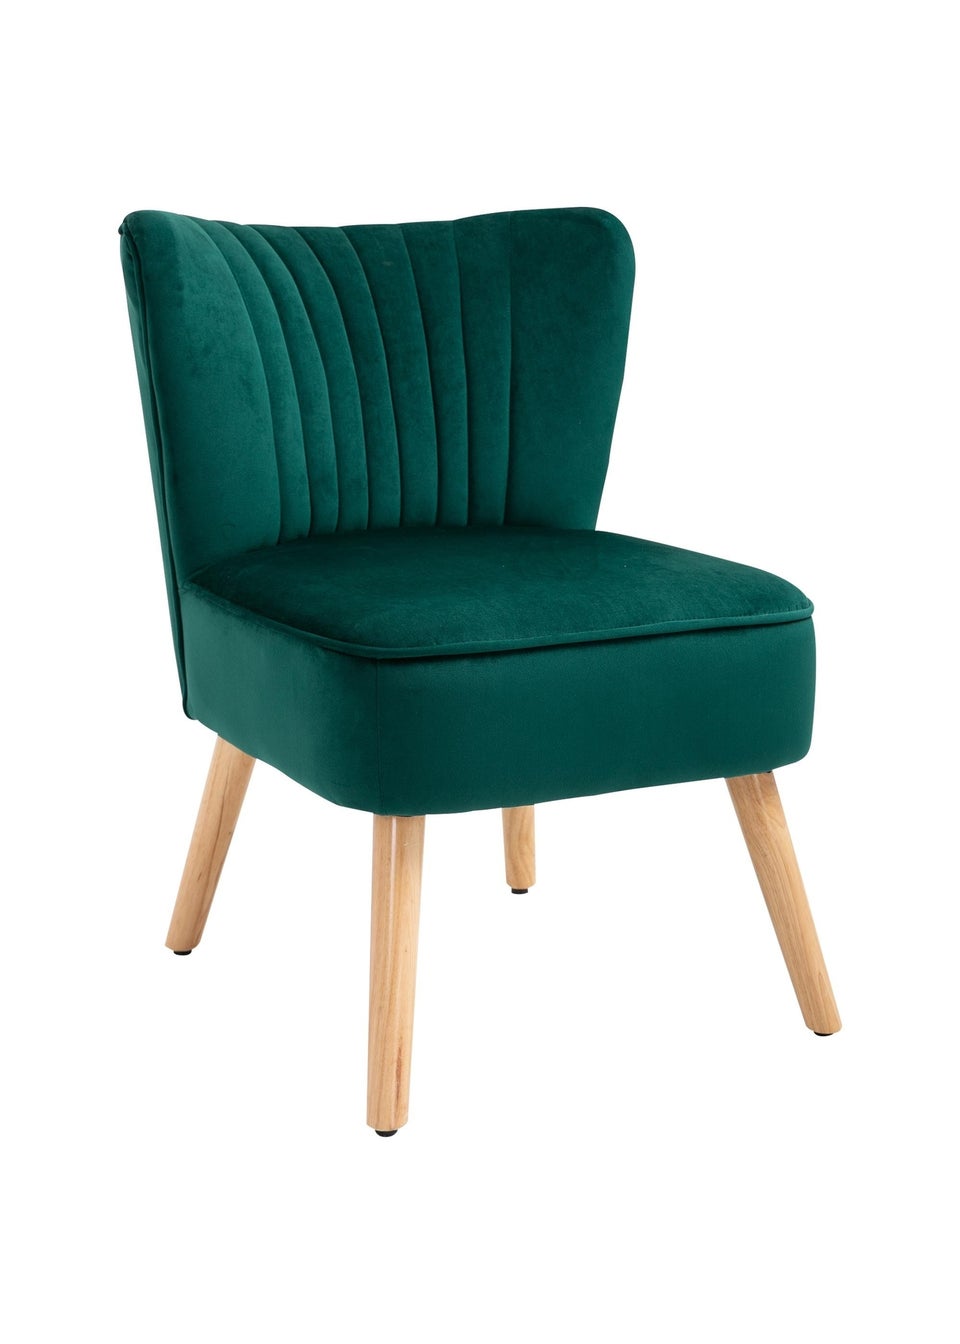 HOMCOM Green Velvet Accent Chair Occasional Tub (57cm x 68cm x 76cm)